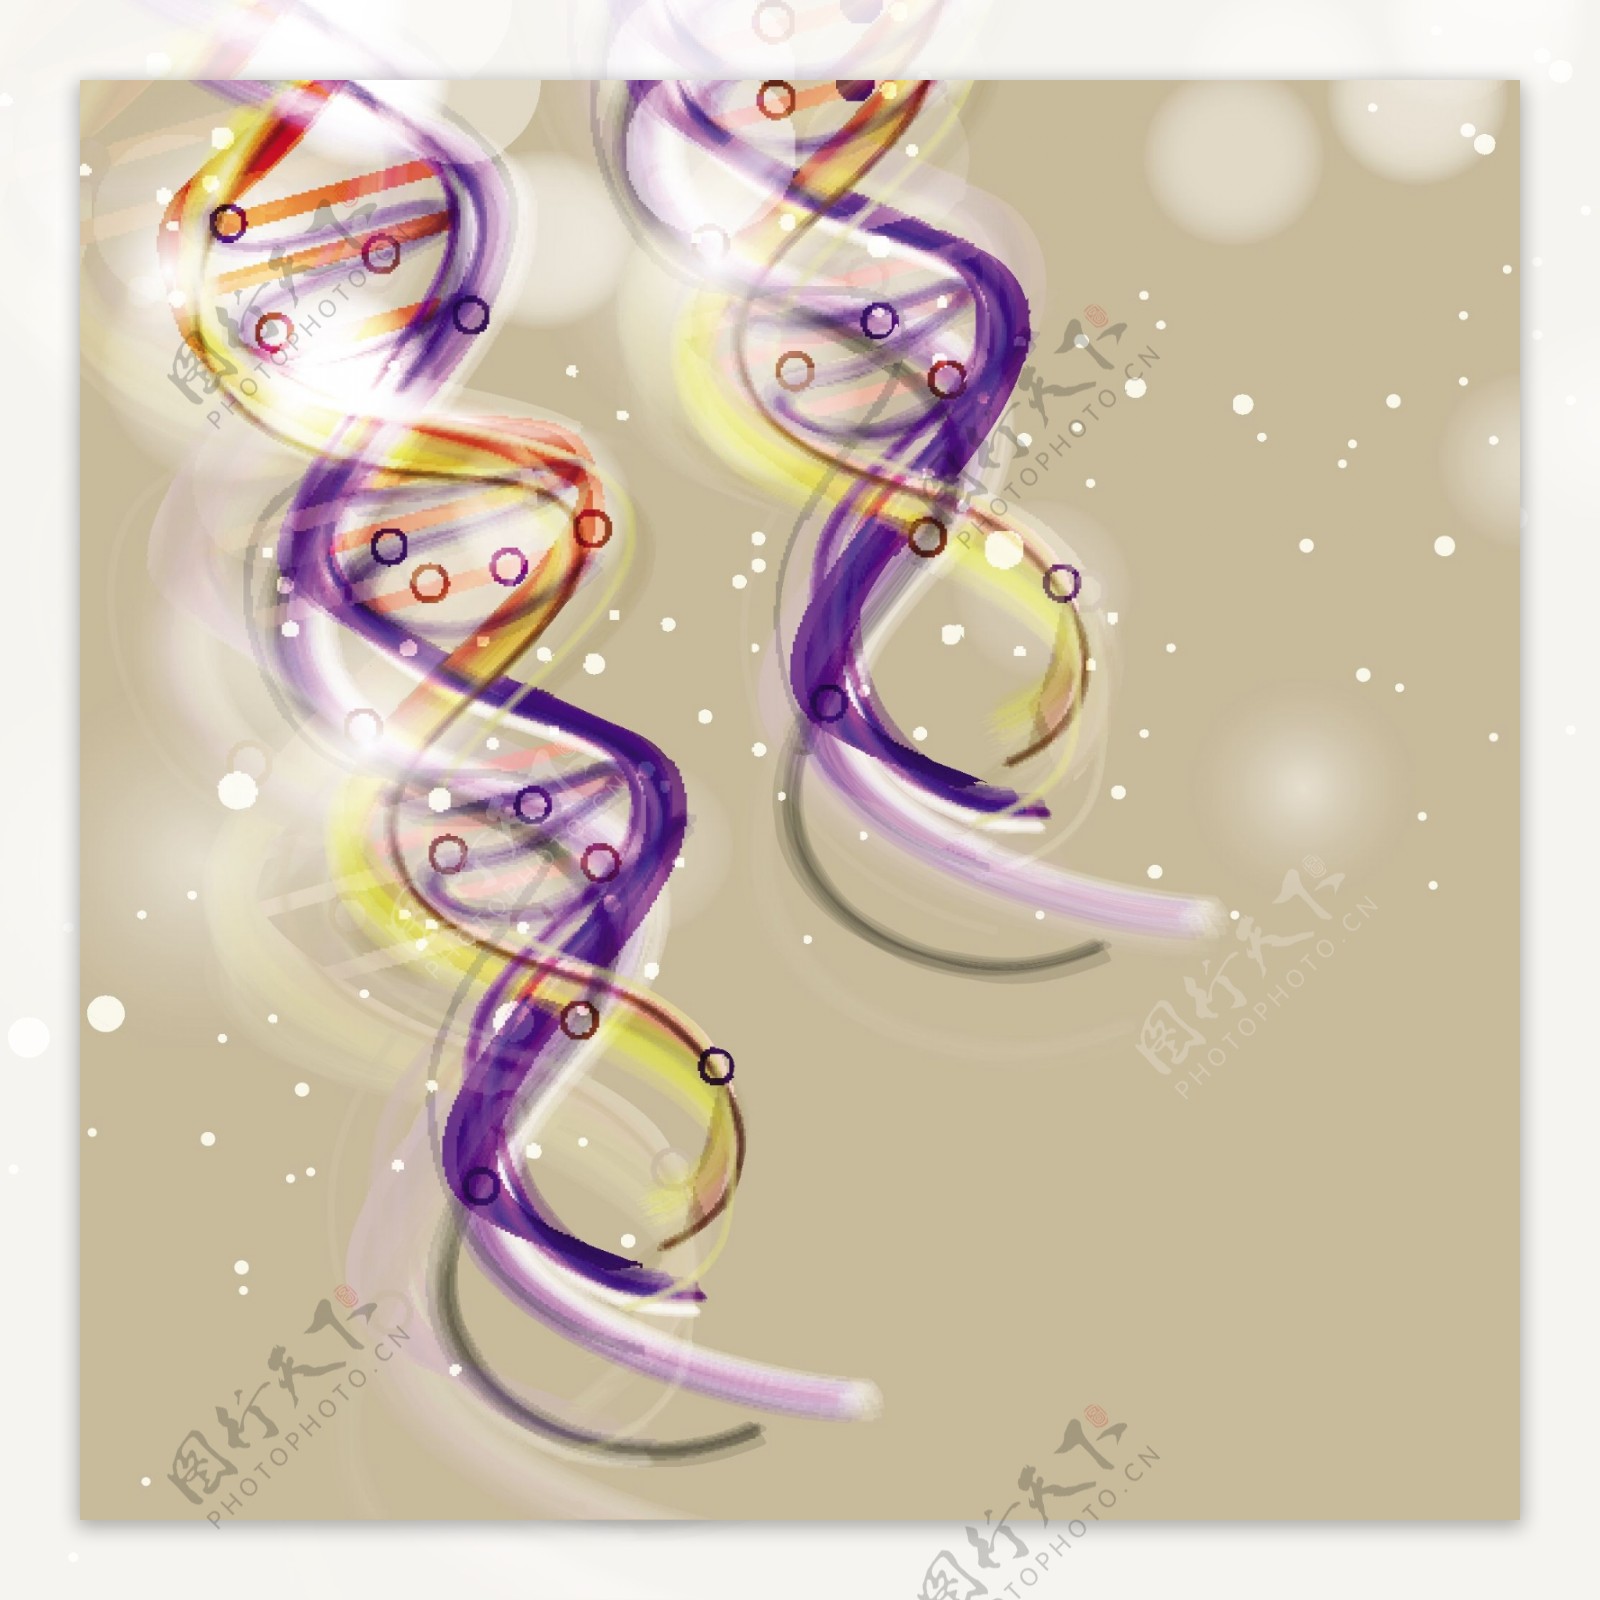 DNA双螺旋结构